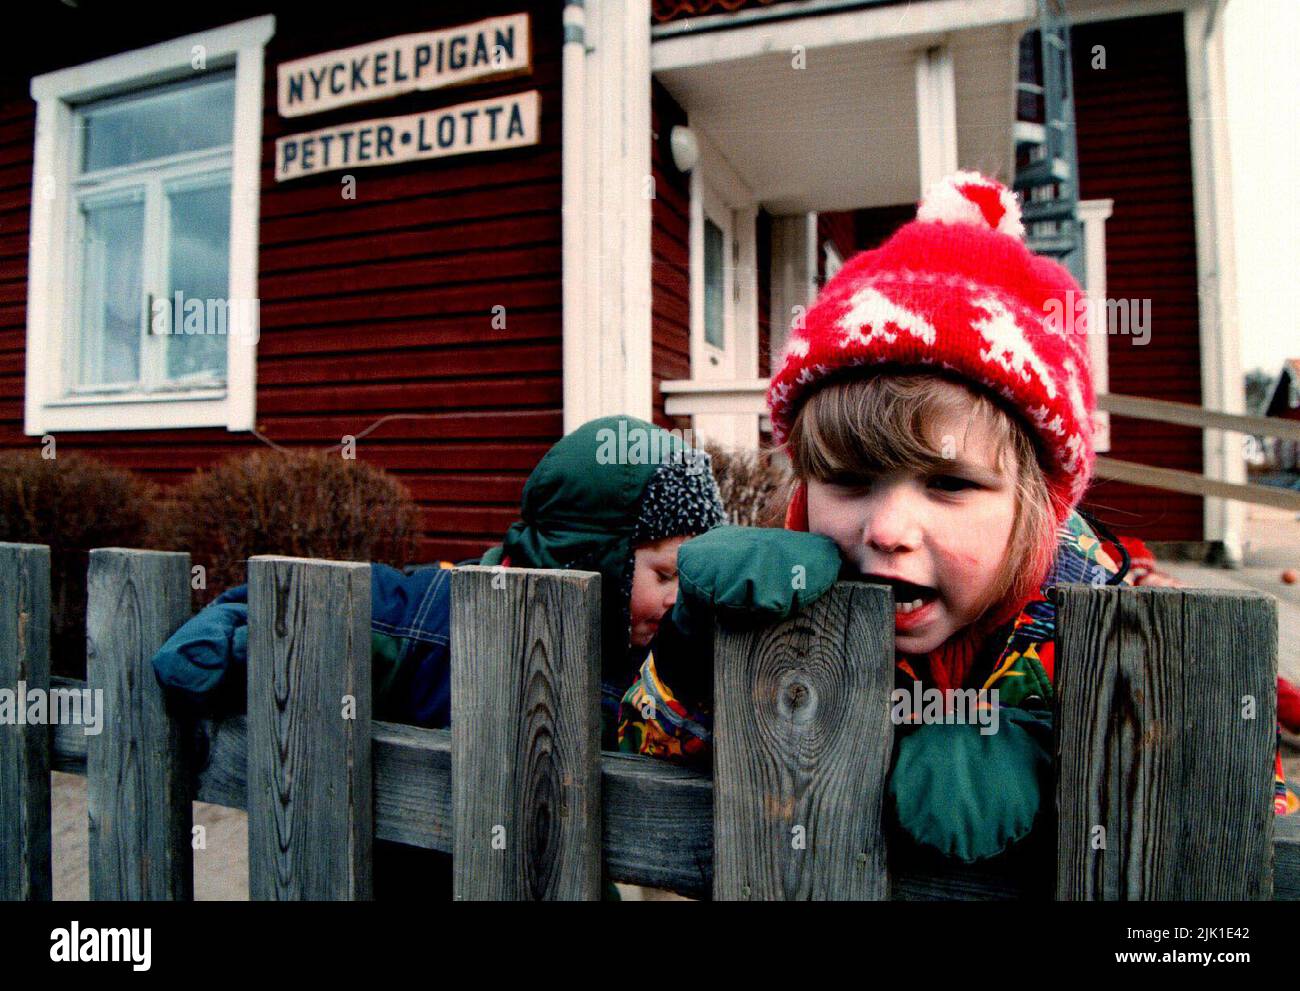 Children at a preschool, Motala, Sweden. Stock Photo